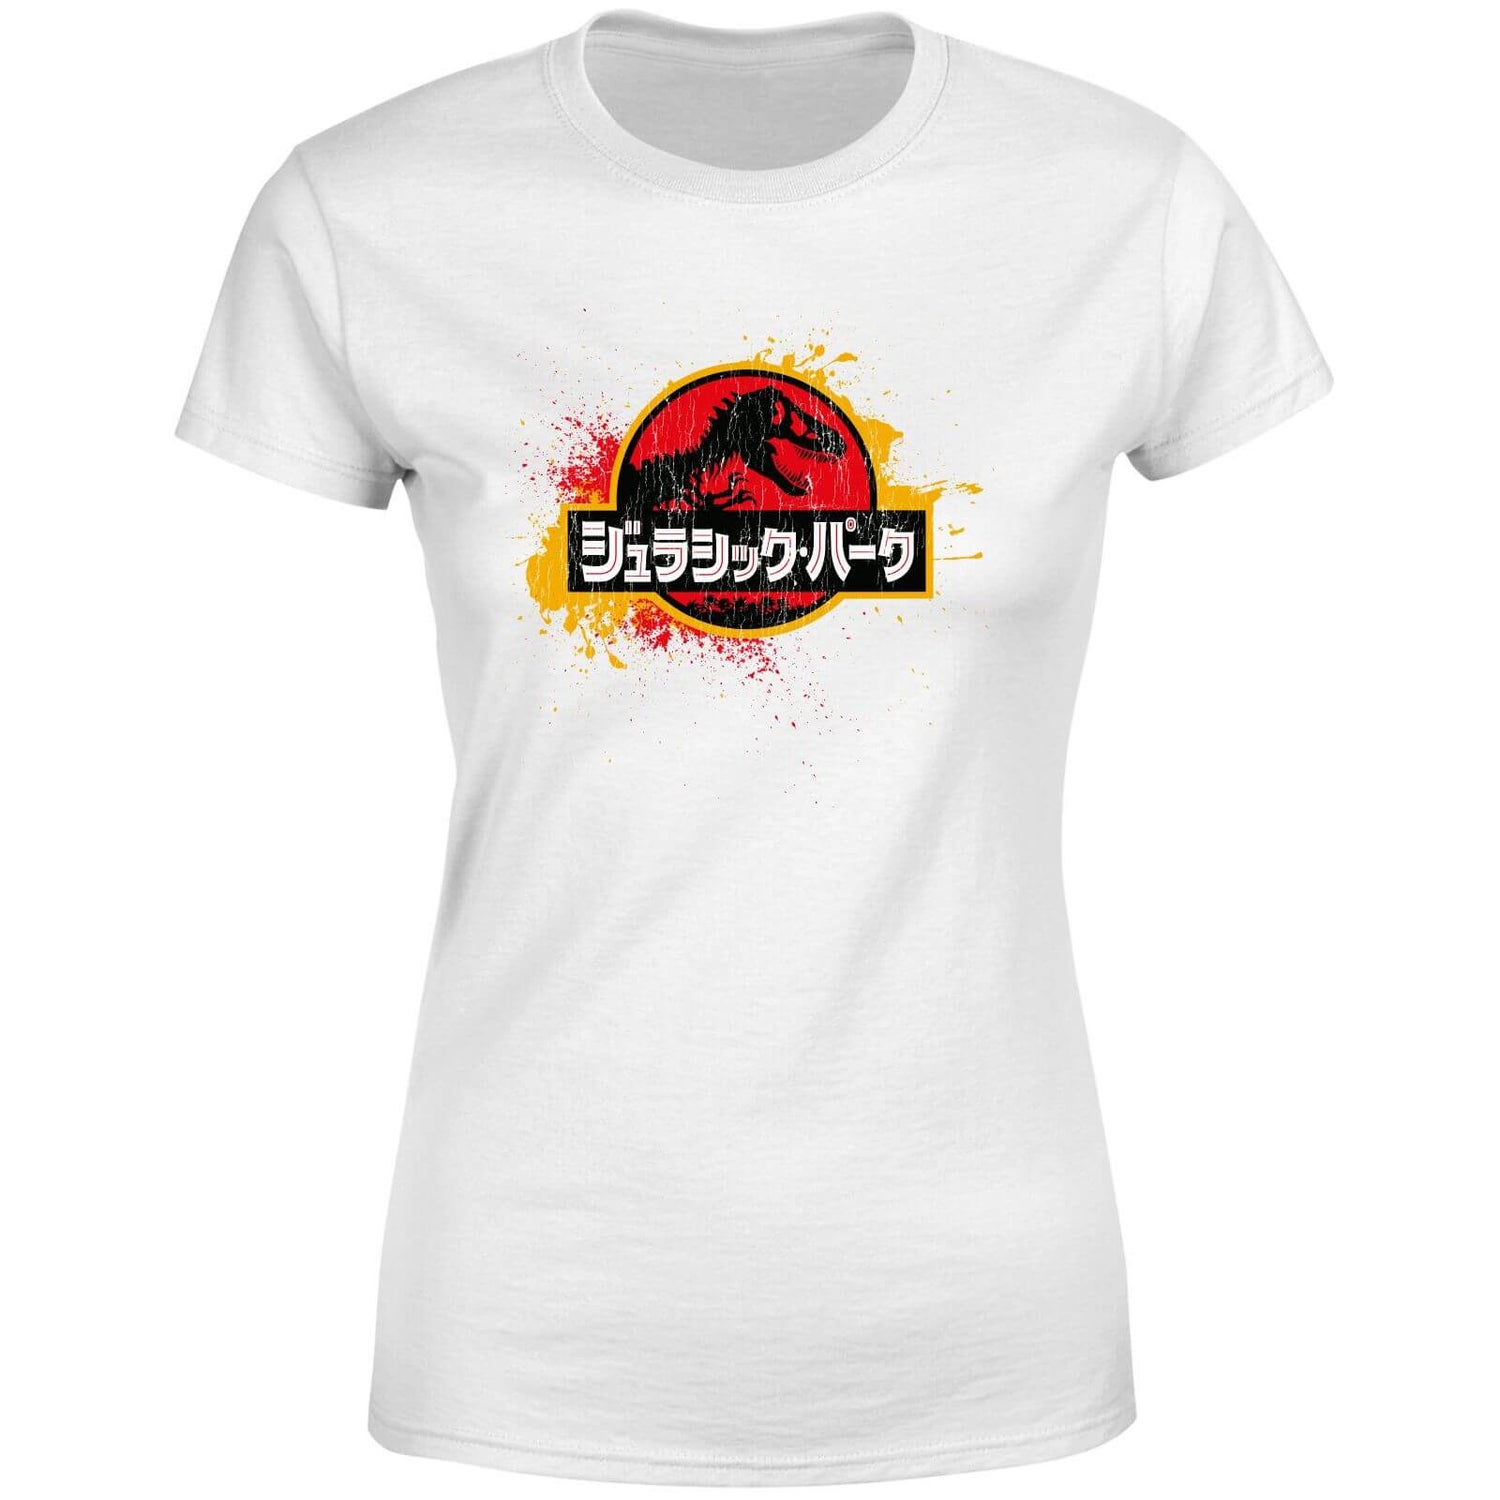 Jurassic Park Women's T-Shirt - White